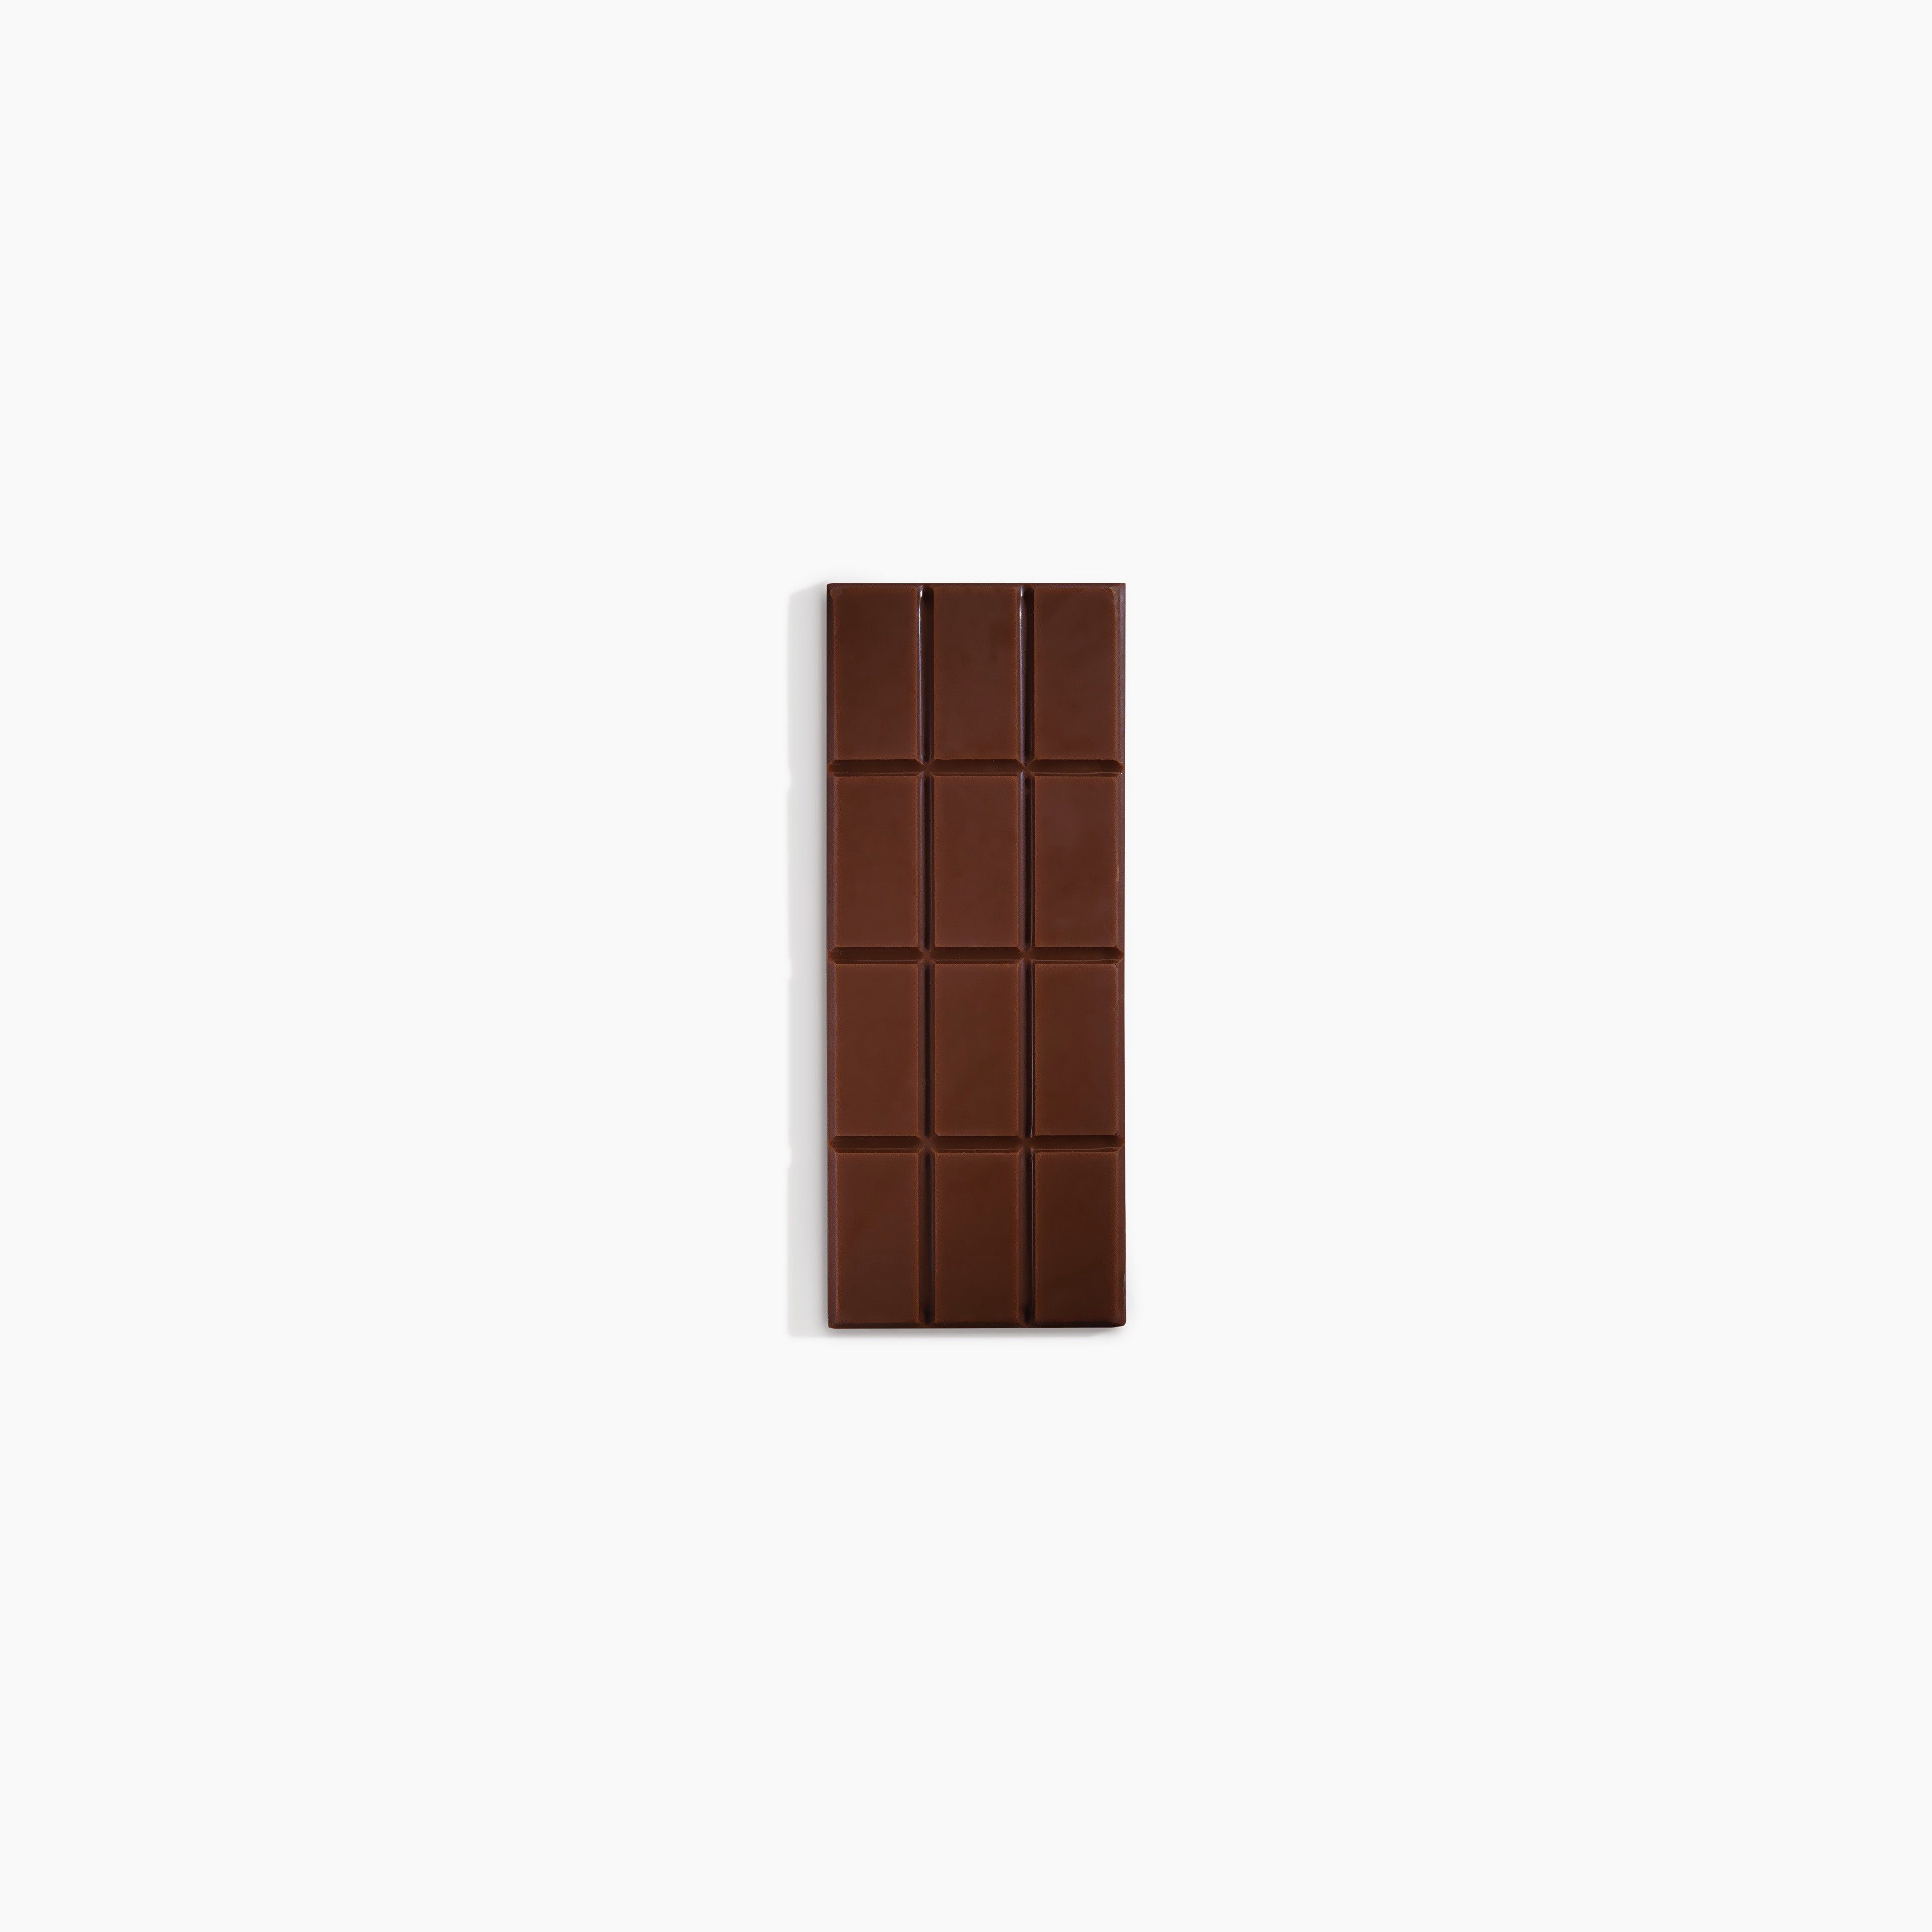 40% Milk Chocolate Bars